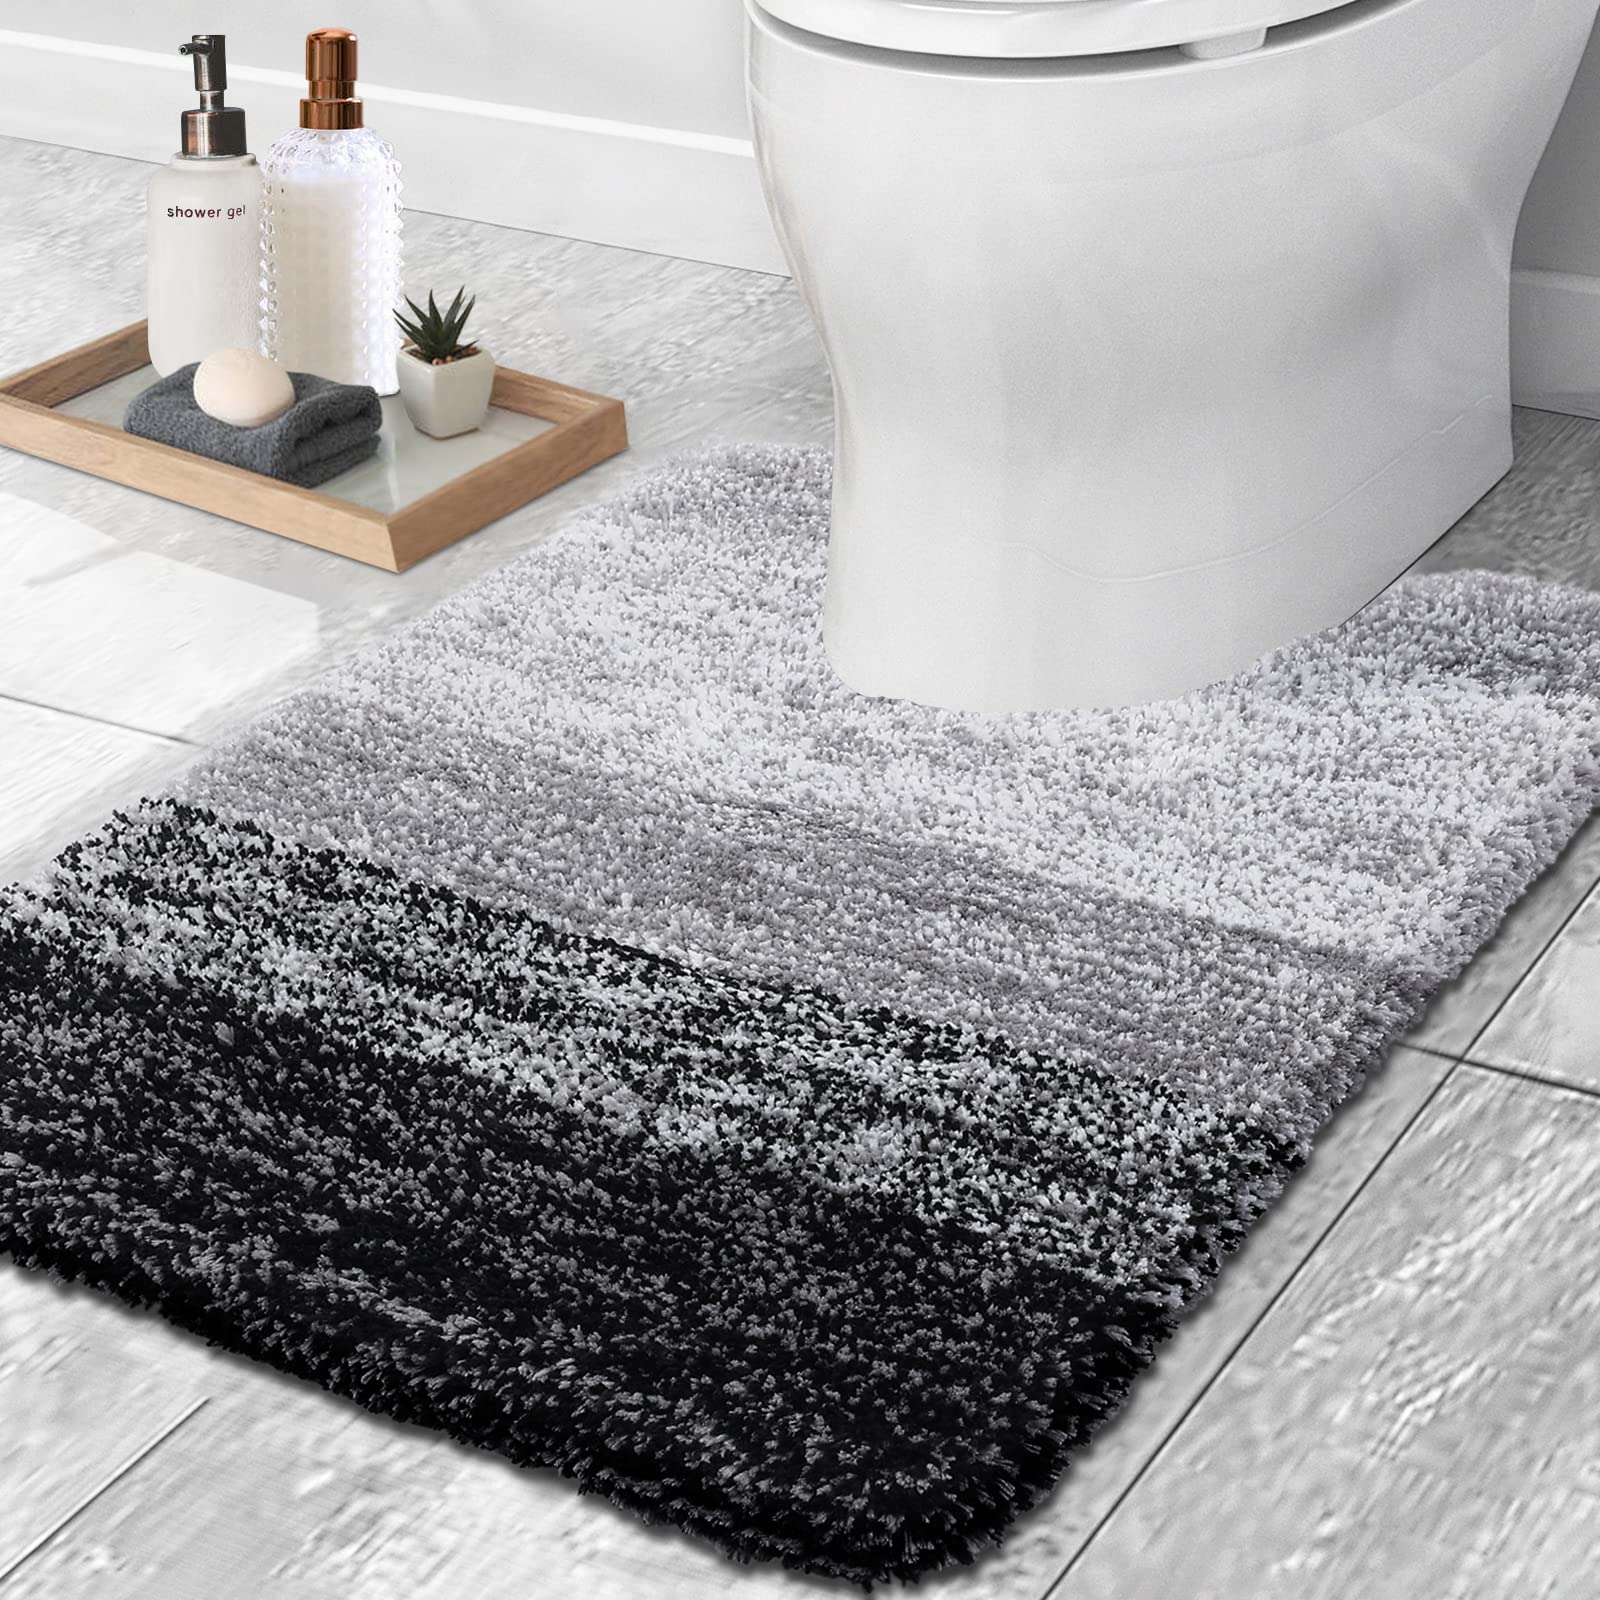 Buganda Luxury U-Shaped Bathroom Rugs, Super Soft and Absorbent Microfiber Toilet Bath Mats, Non-Slip Contour Bathroom Carpets with Rubber Backing, 20X24, Black - image 1 of 7